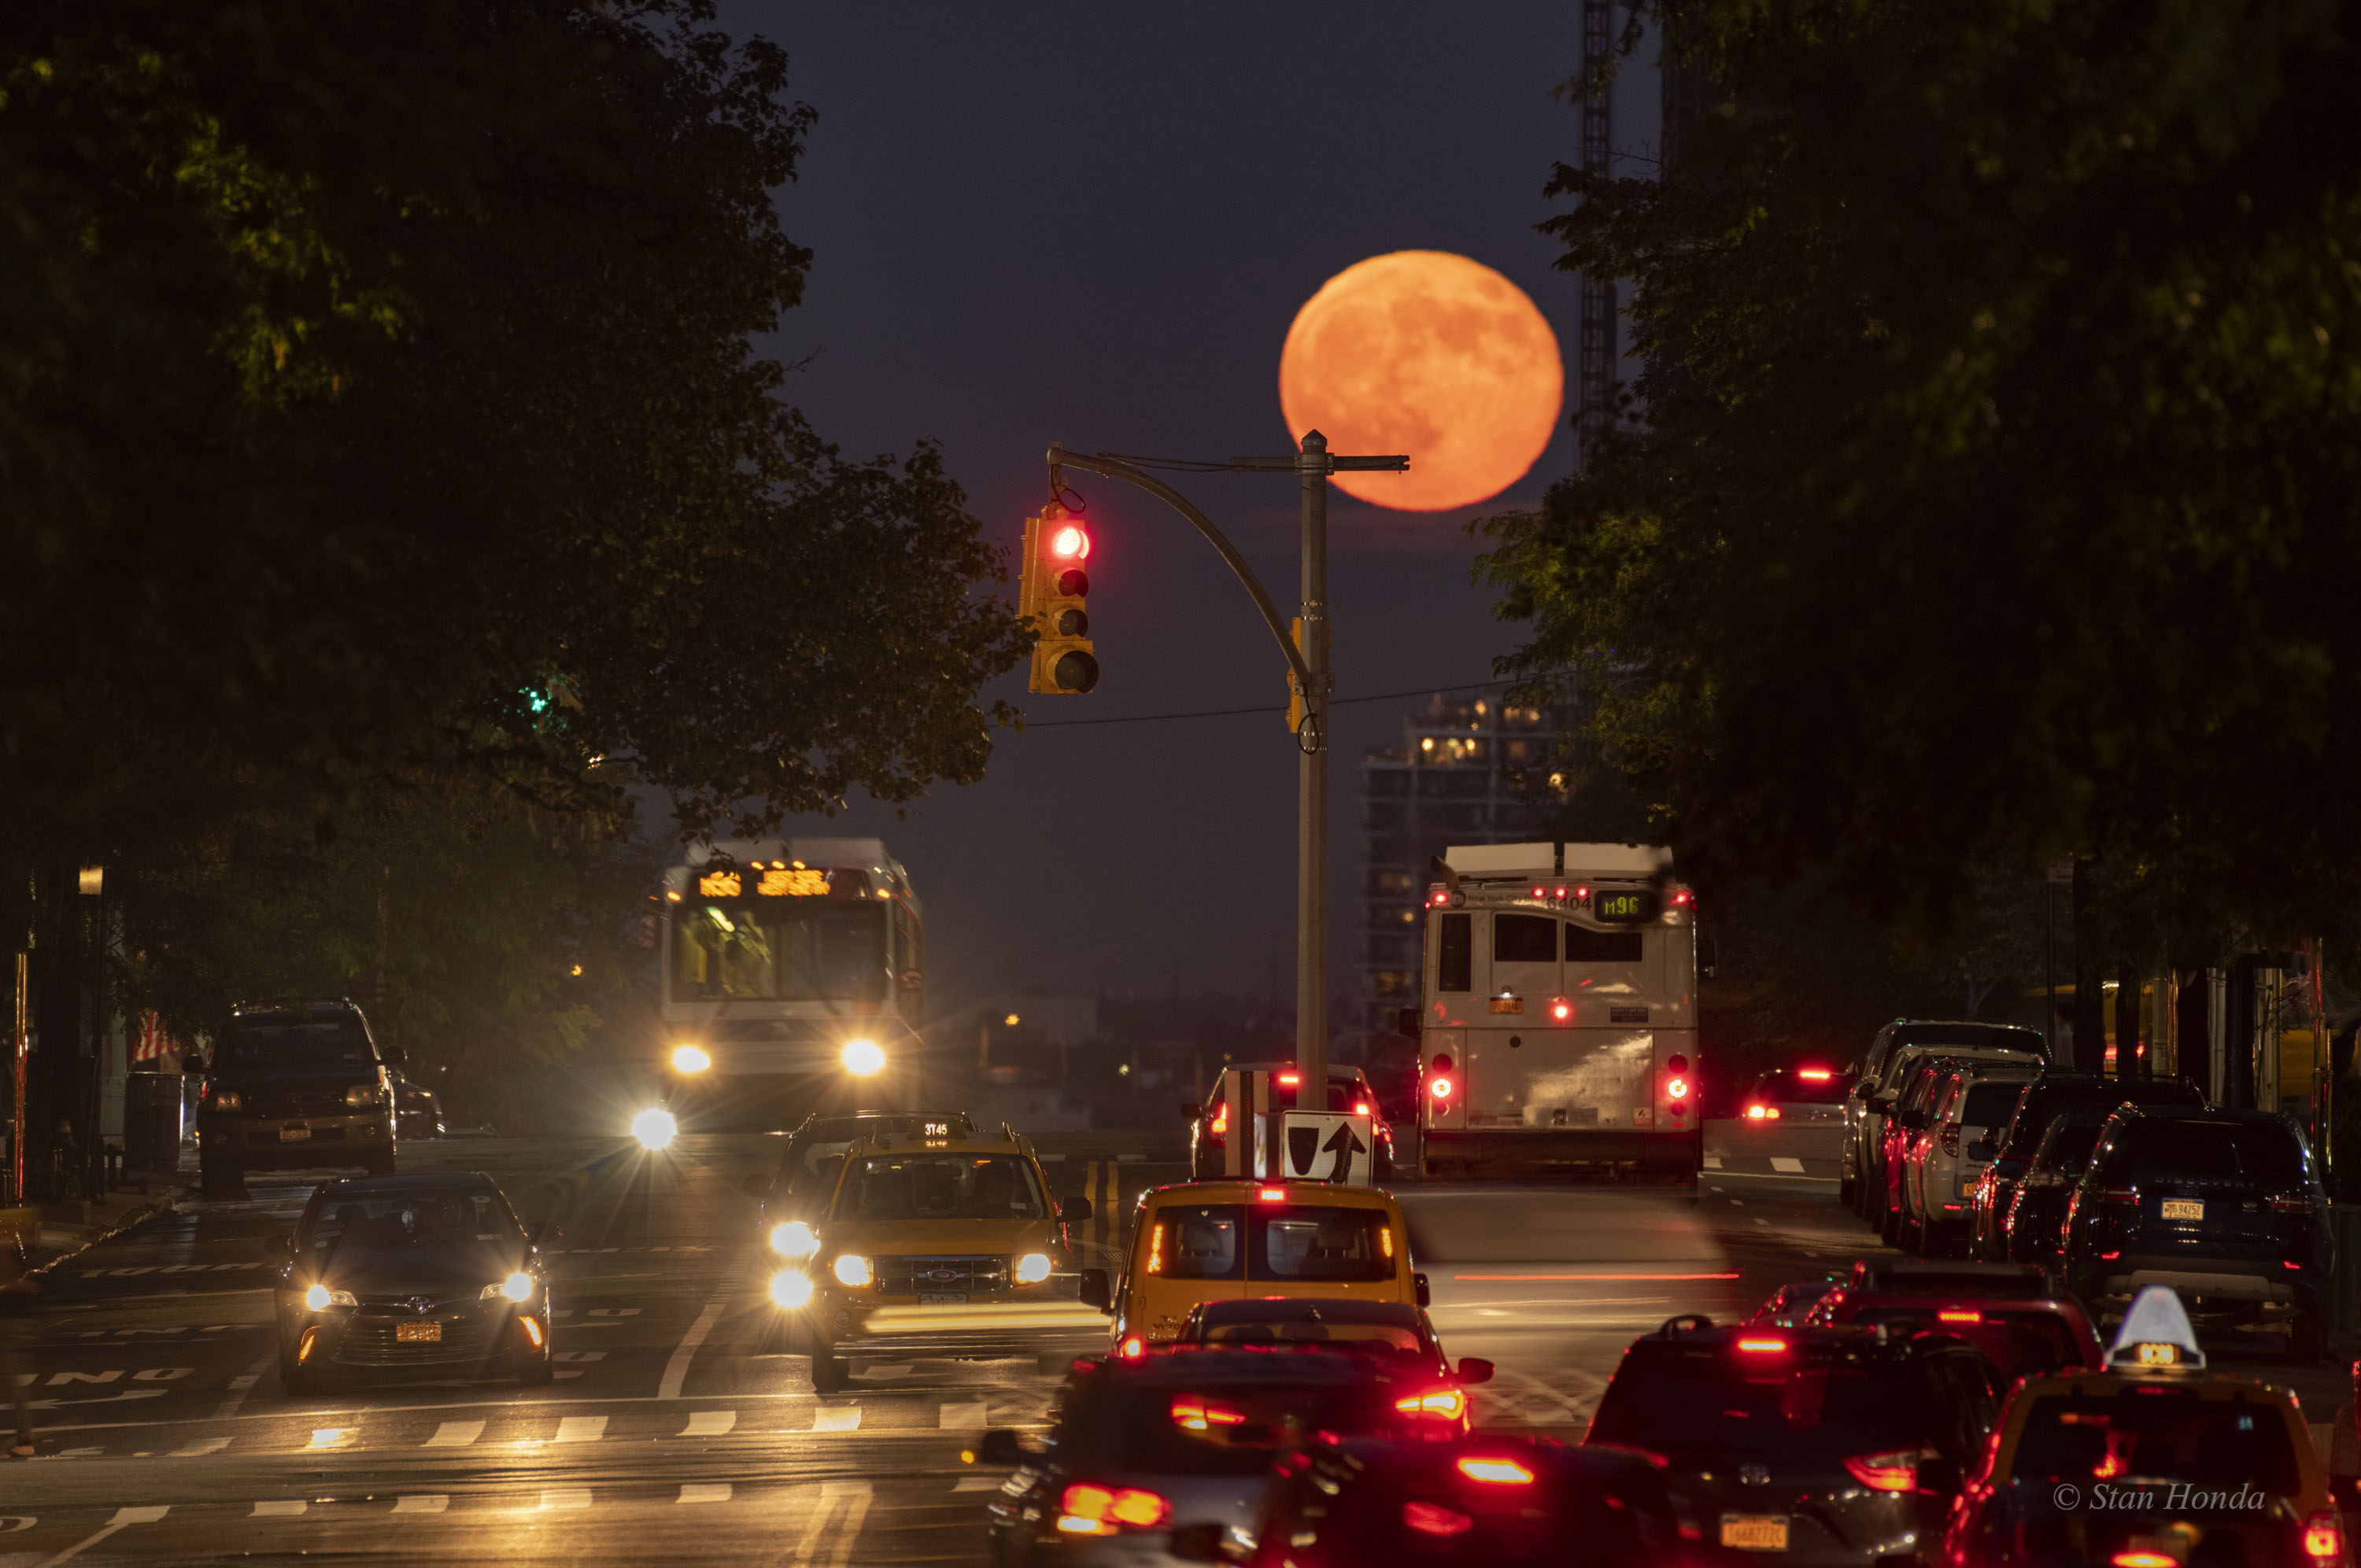 The East 96th Street Moon